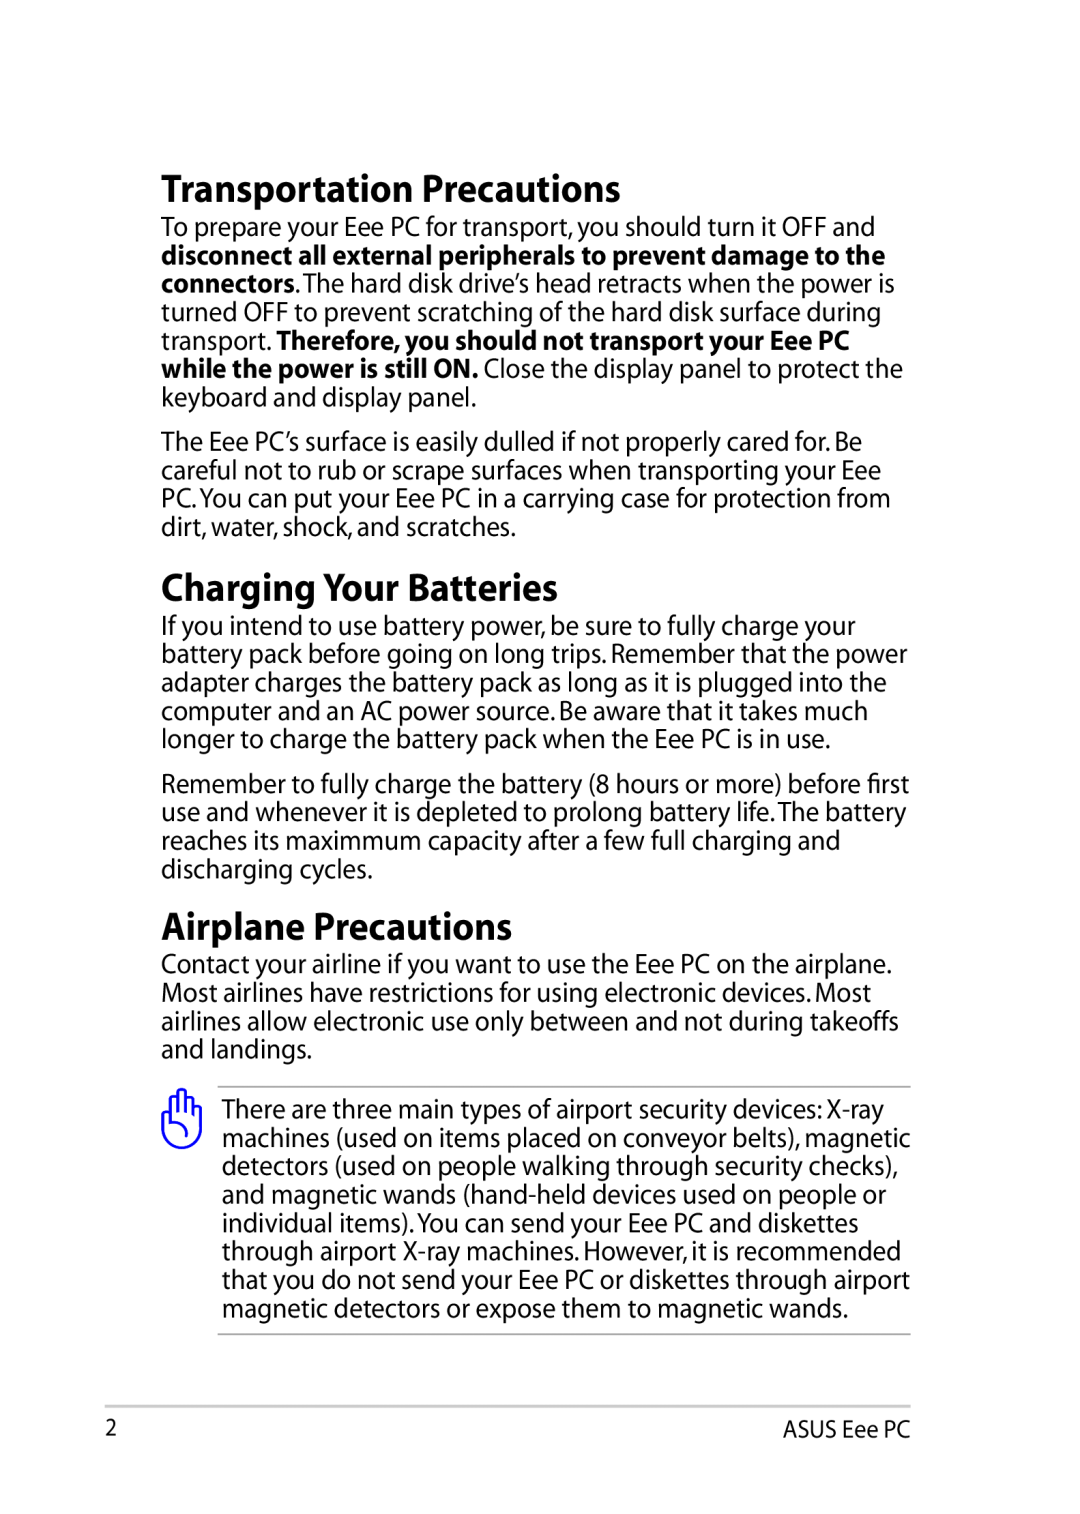 Asus 900AX user manual Transportation Precautions, Charging Your Batteries, Airplane Precautions 